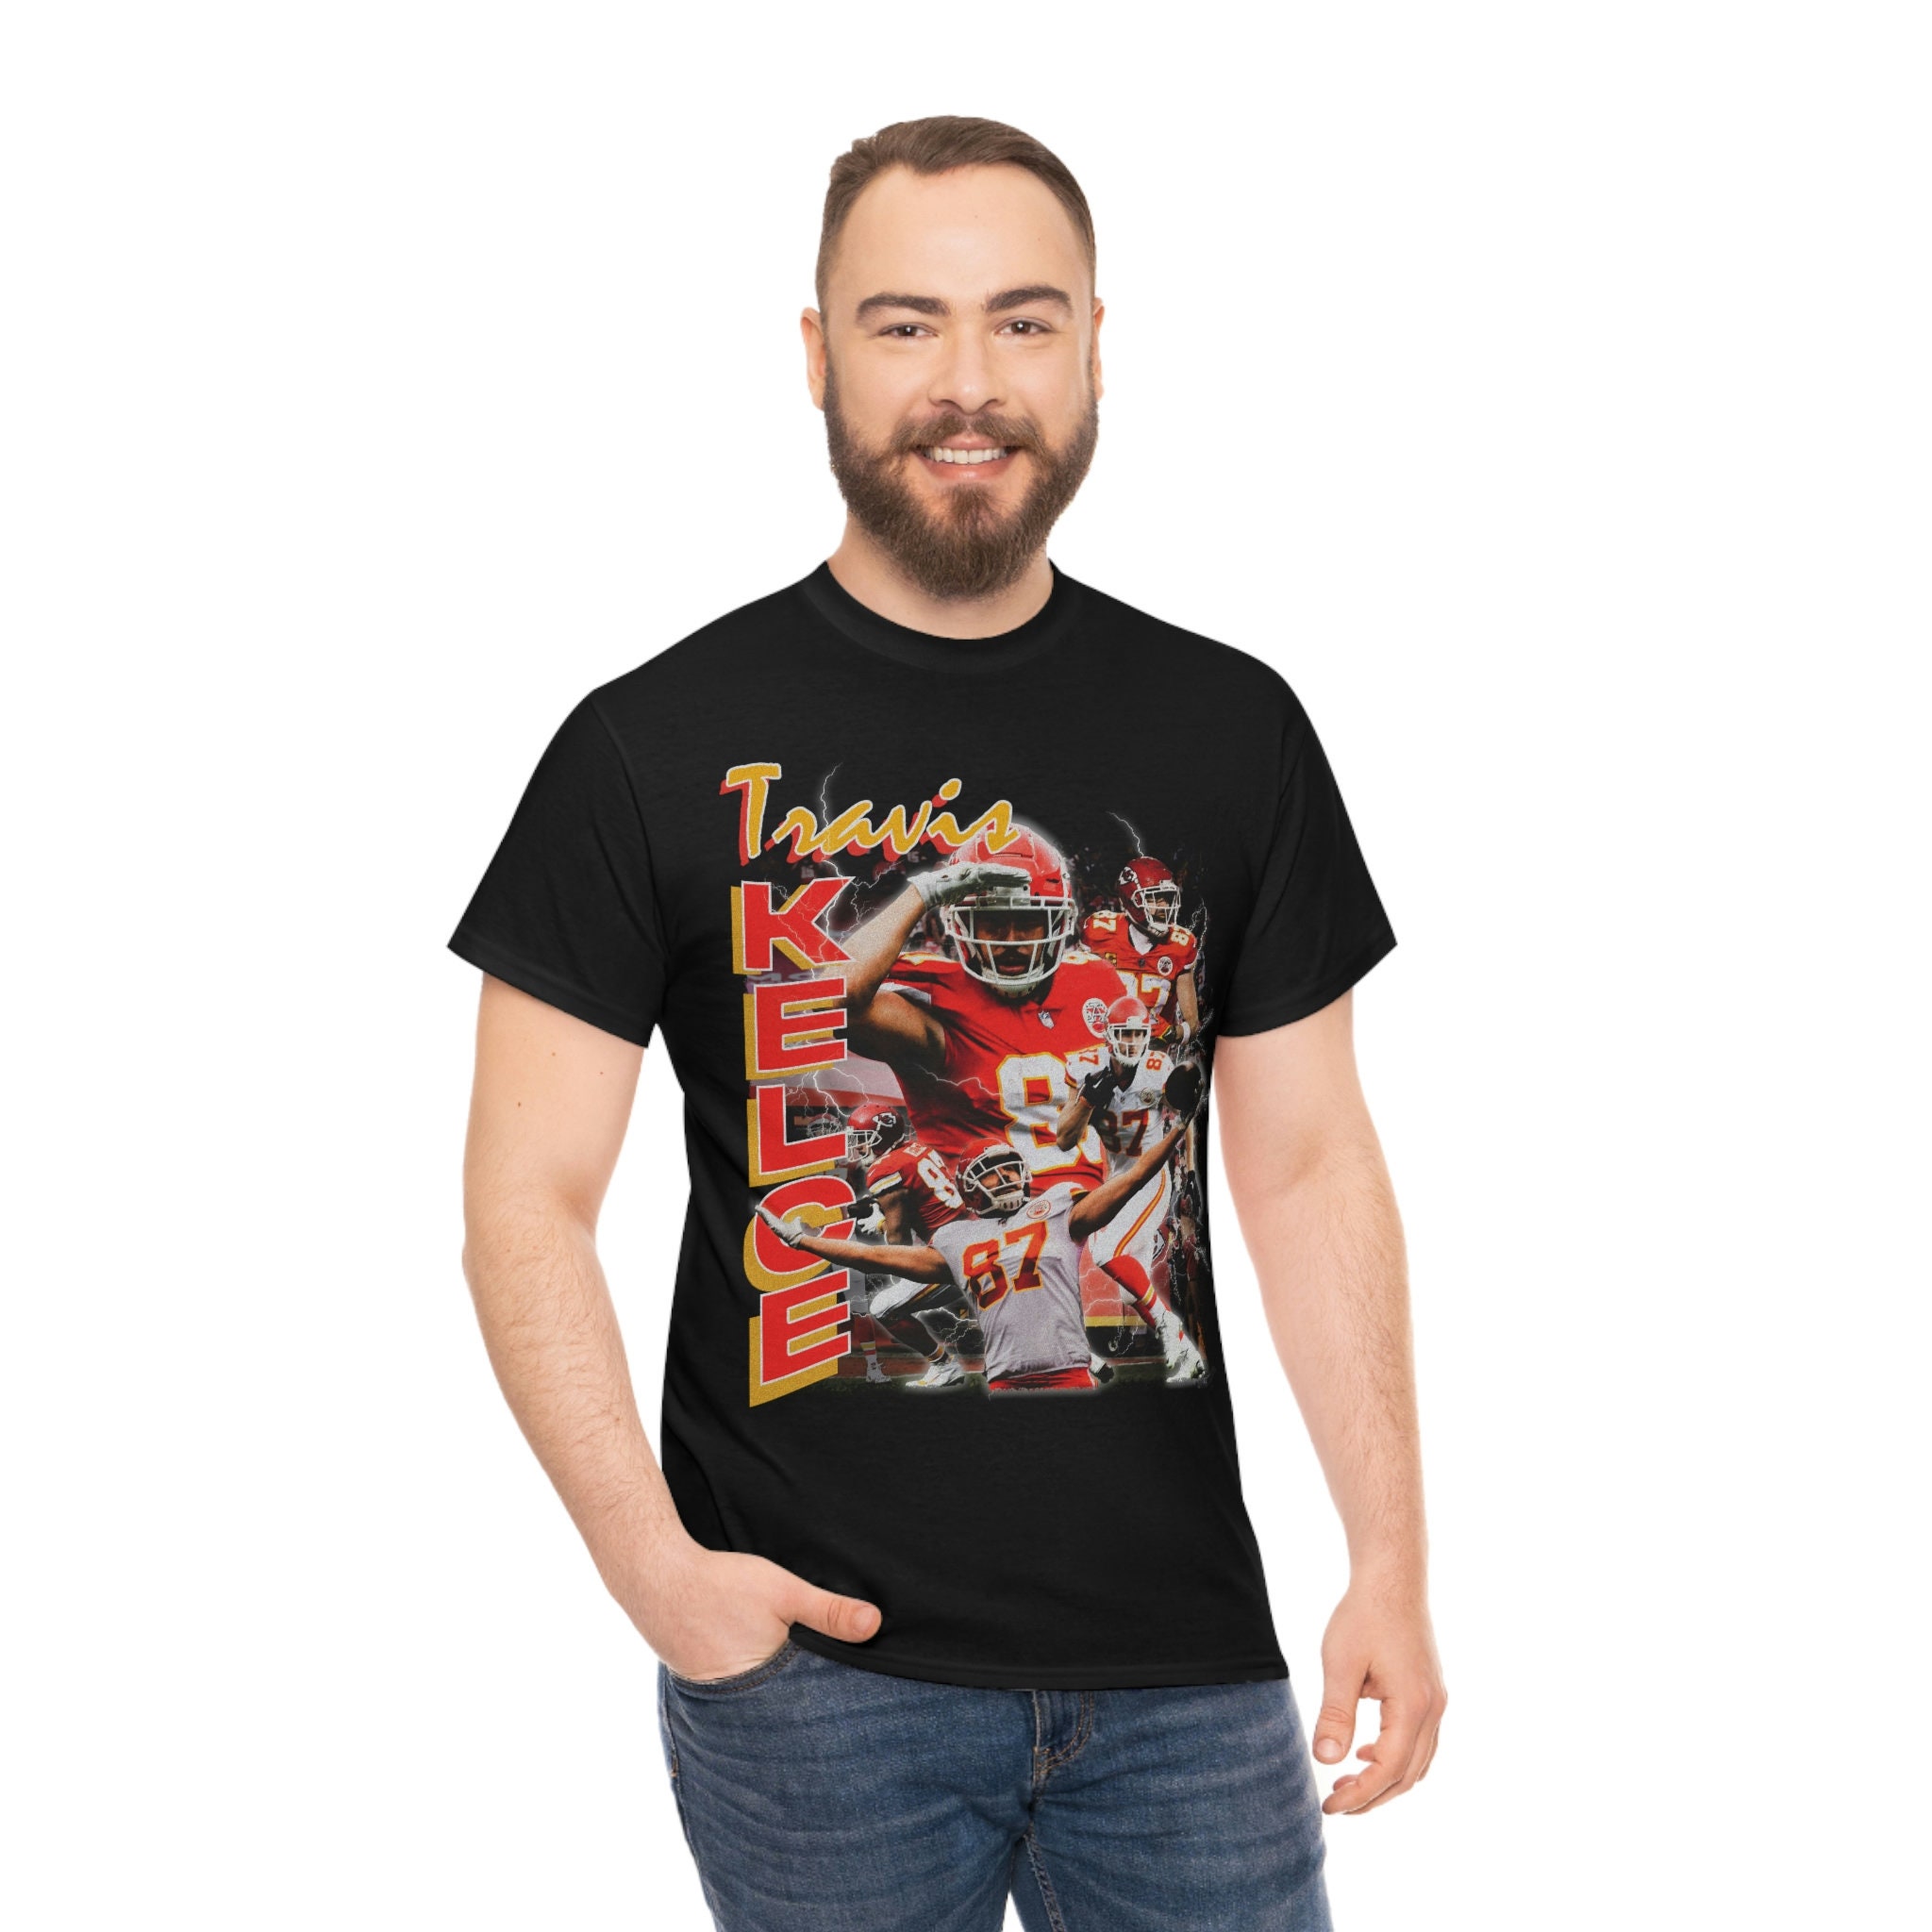 Discover Travis Kelce t shirt - Kansas City Chiefs, GOAT tight end, Super Bowl, Red Kingdom, vintage 90s bootleg T-Shirt